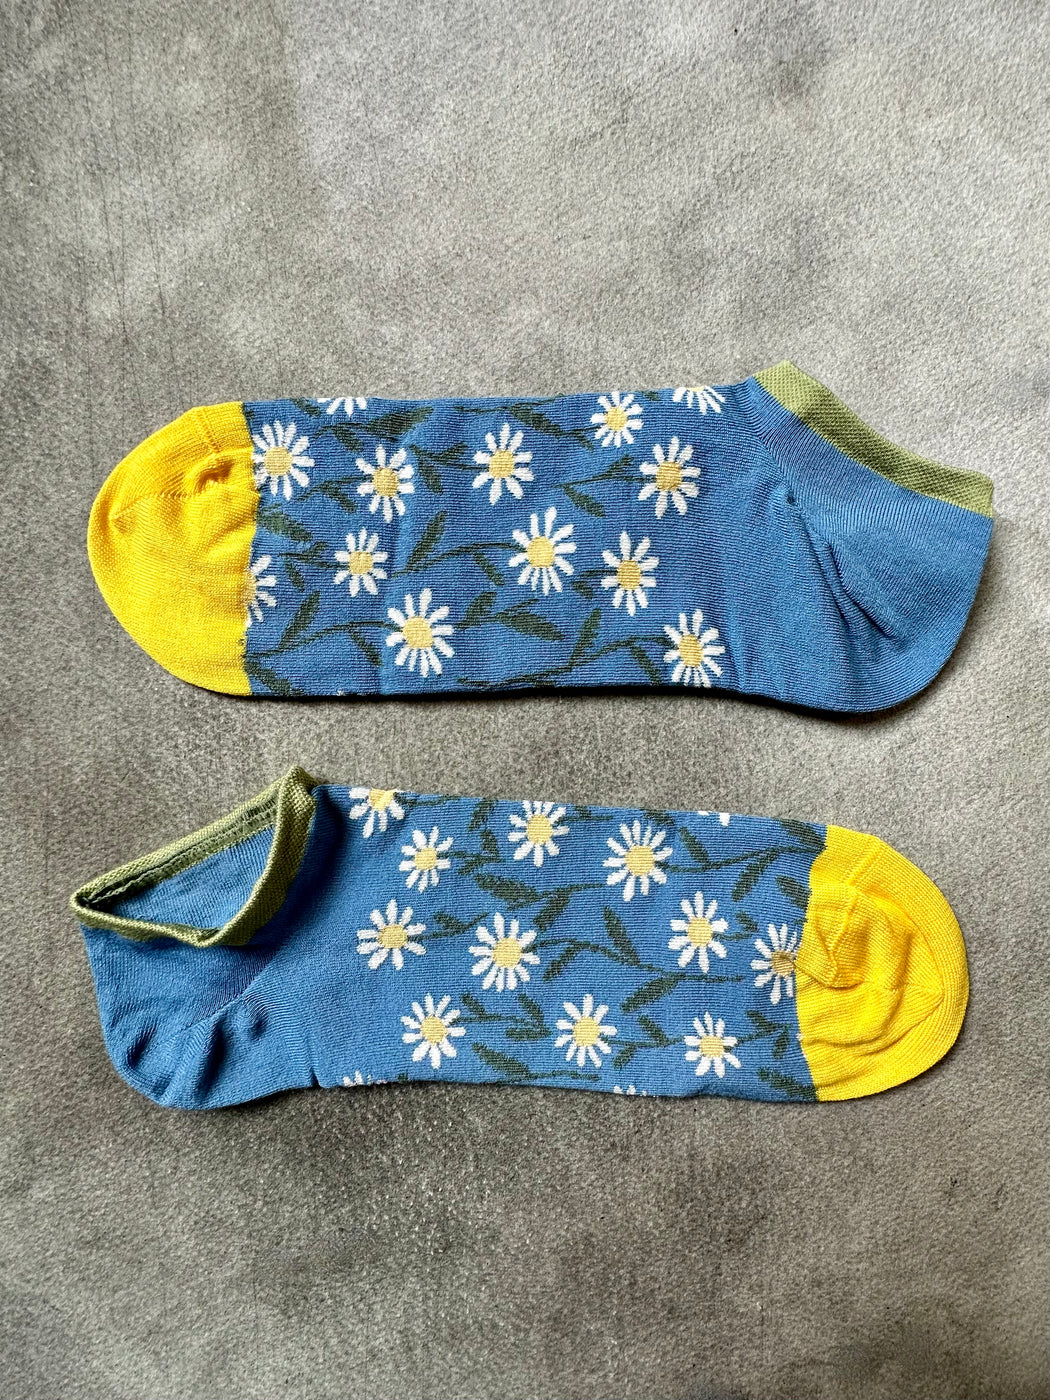 "Daisies" Socks by Bonne Maison